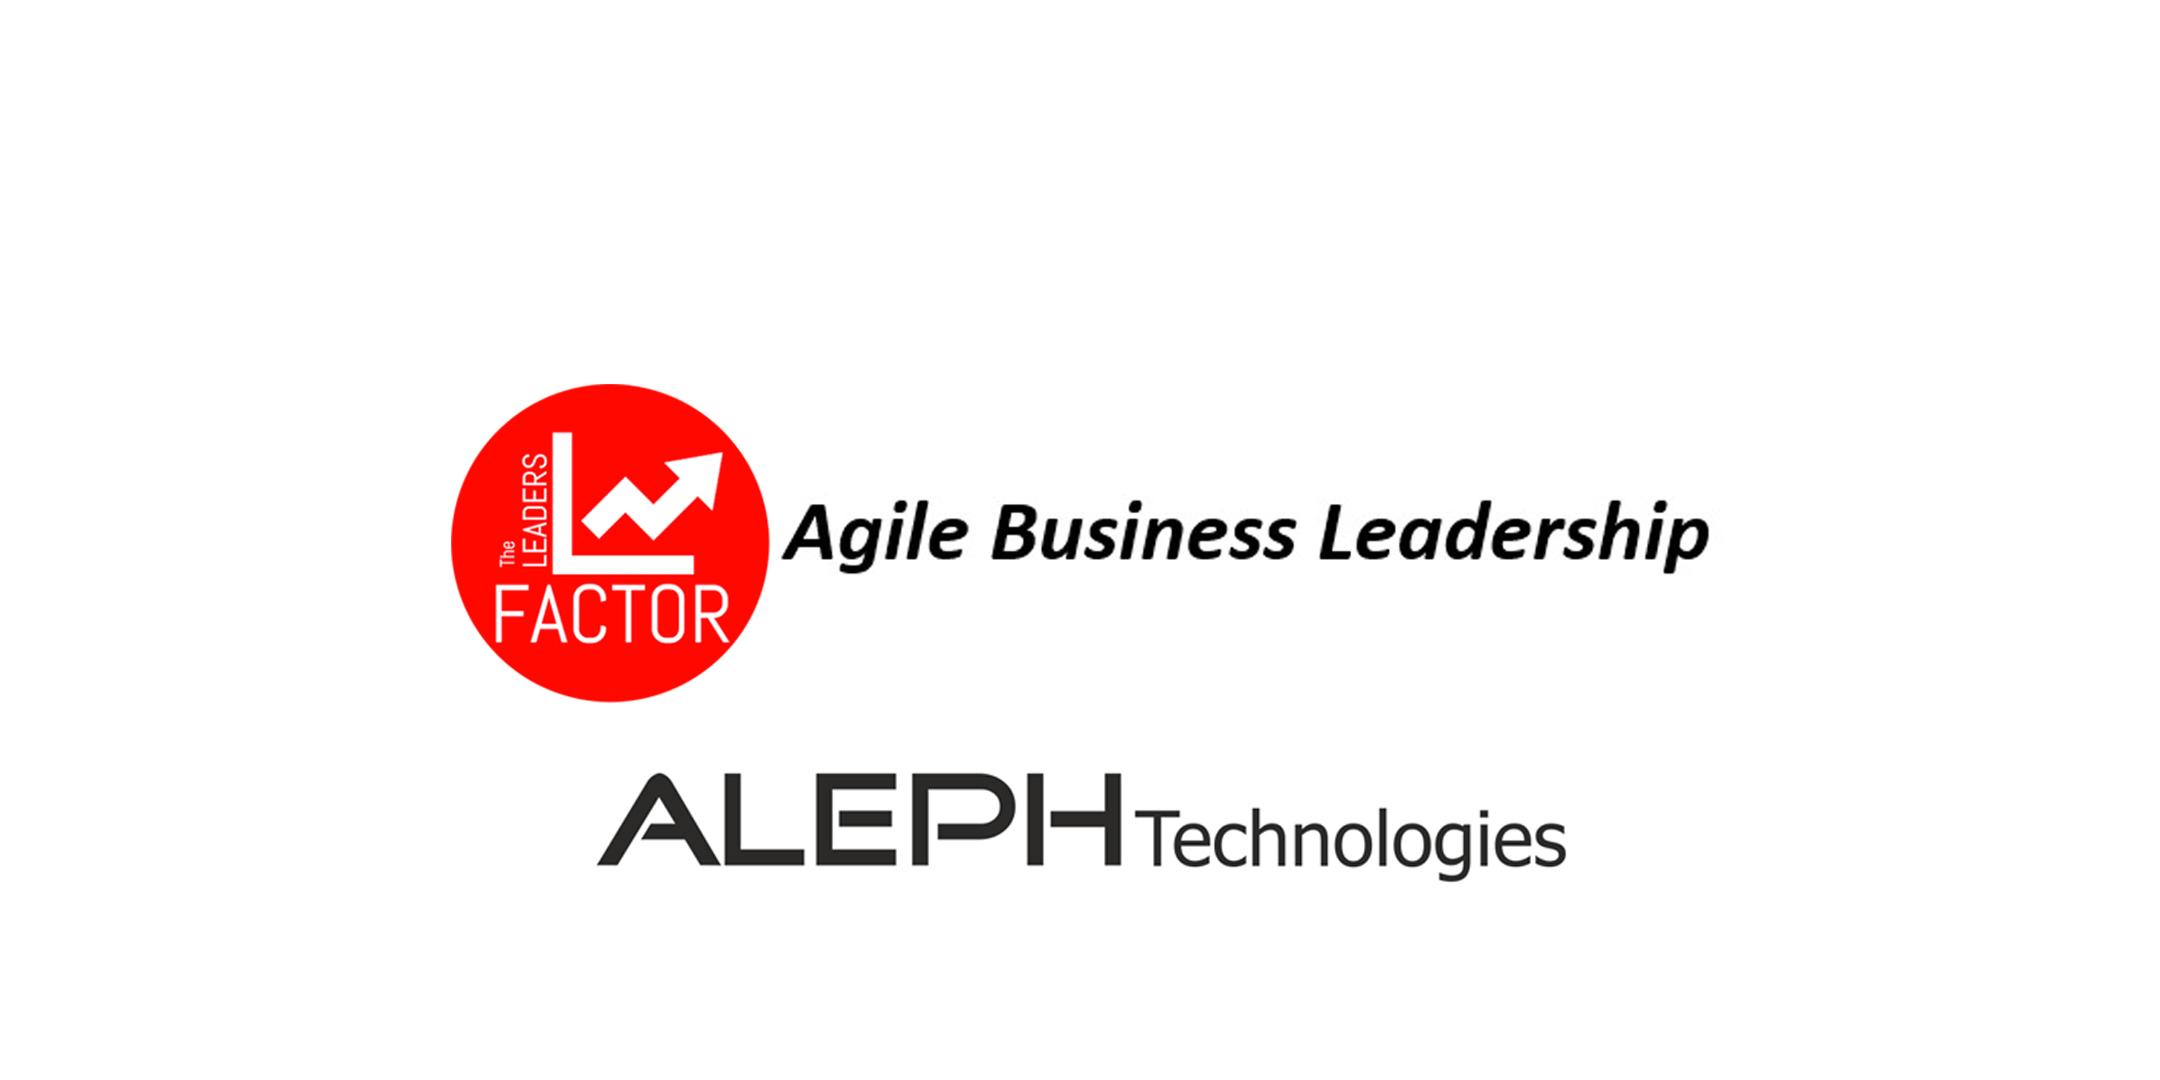 The Leaders Factor - Agile Business Leadership Workshop (Tue,June 6th - Wed,June 7th 2017) 